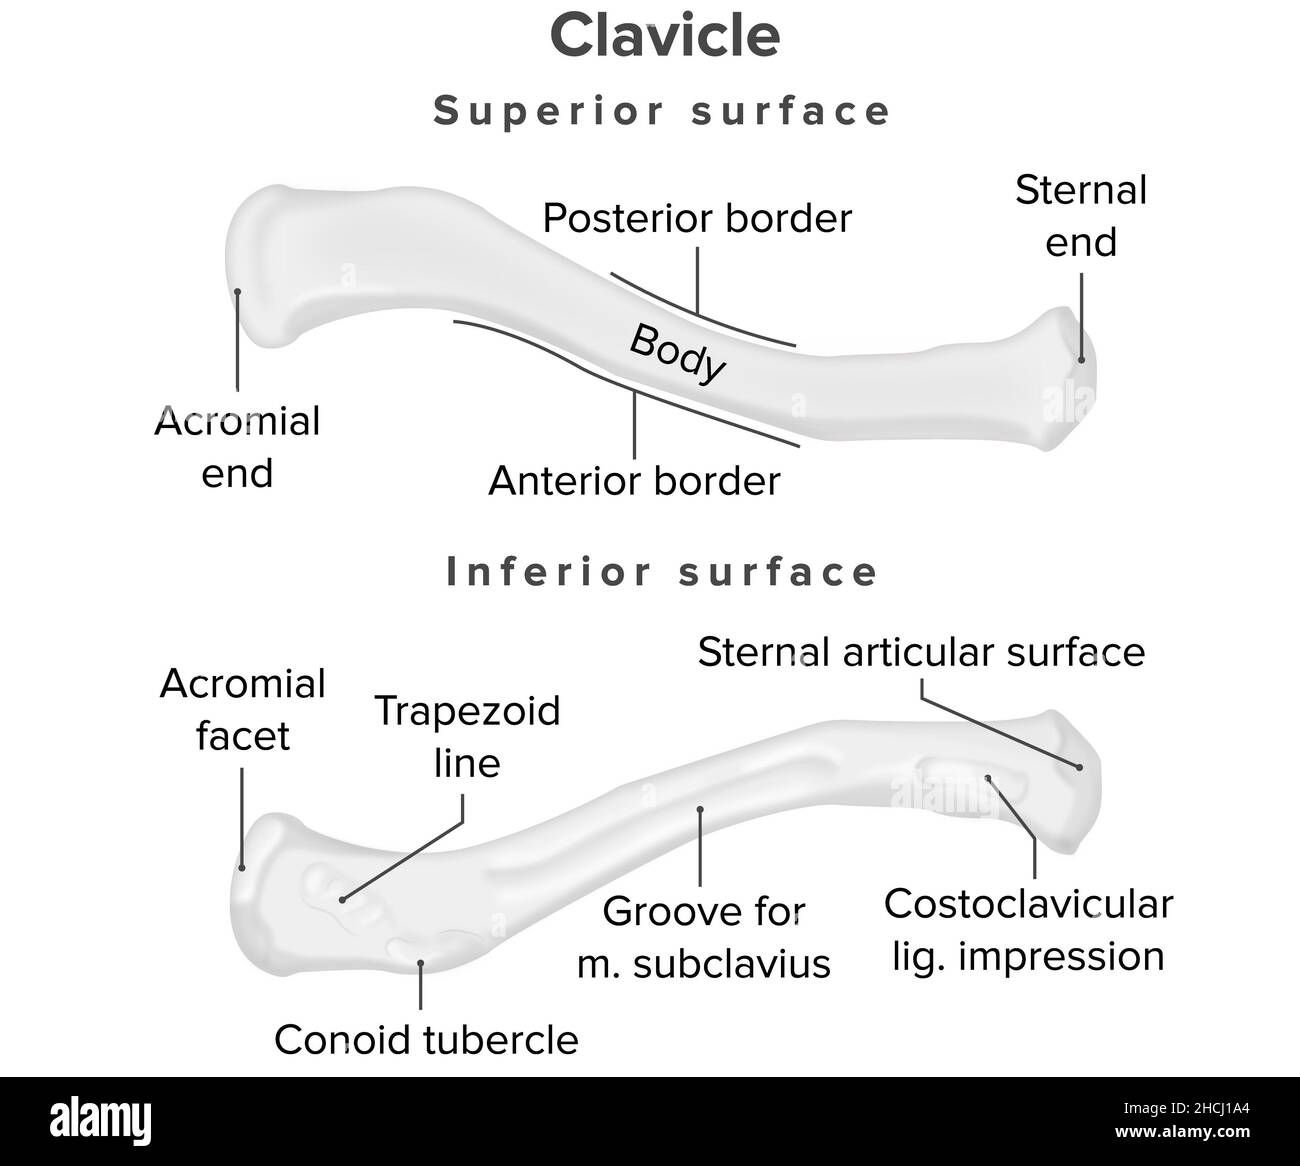 Clavicle, superior surface, human  anatomy Stock Photo